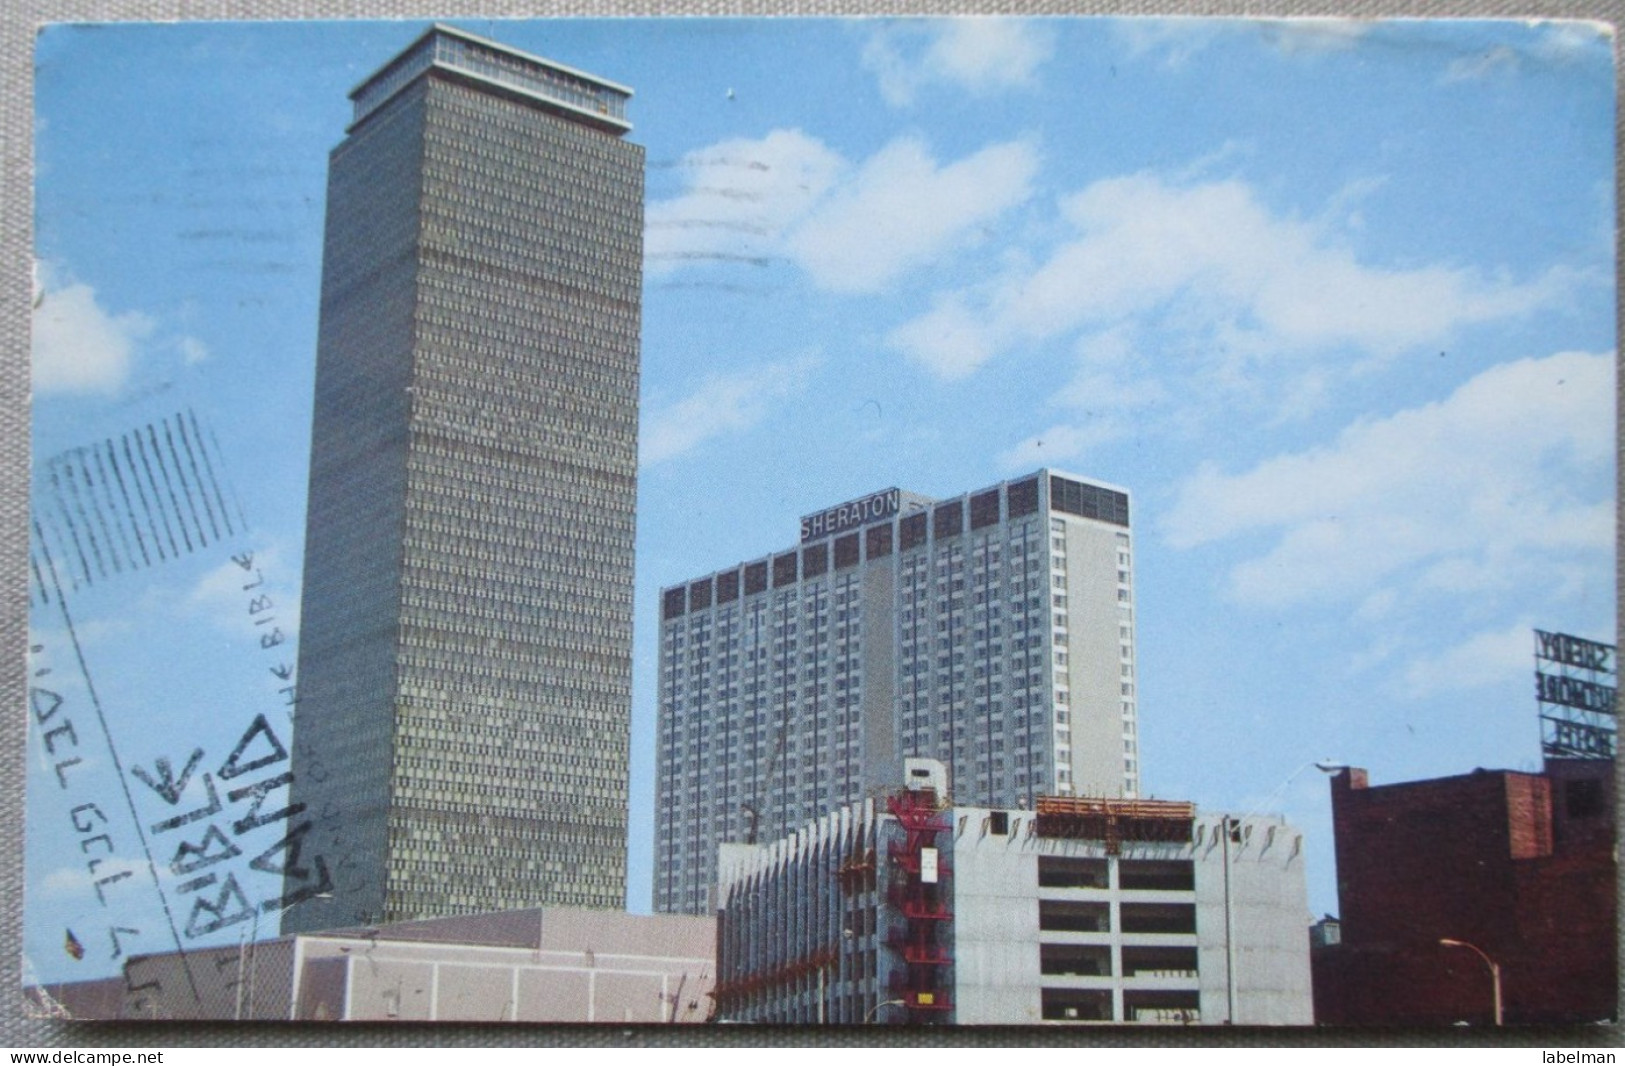 USA UNITED STATES BOSTON PRUDENTIAL CENTER SHERATON HOTEL CARD POSTCARD CARTE POSTALE ANSICHTSKARTE CARTOLINA POSTKARTE - Atlanta